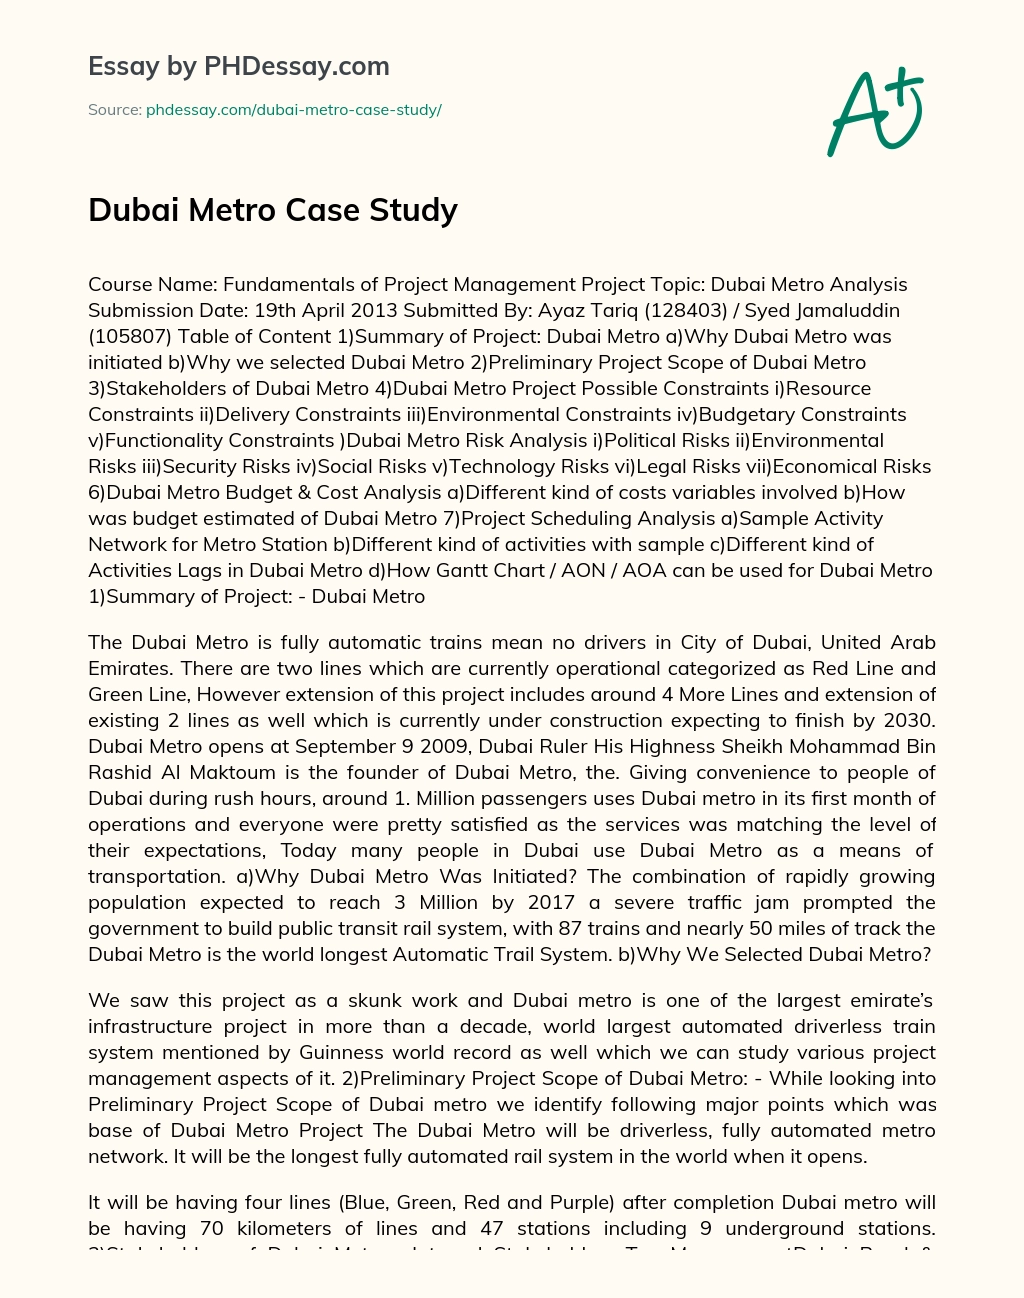 Dubai Metro Case Study essay